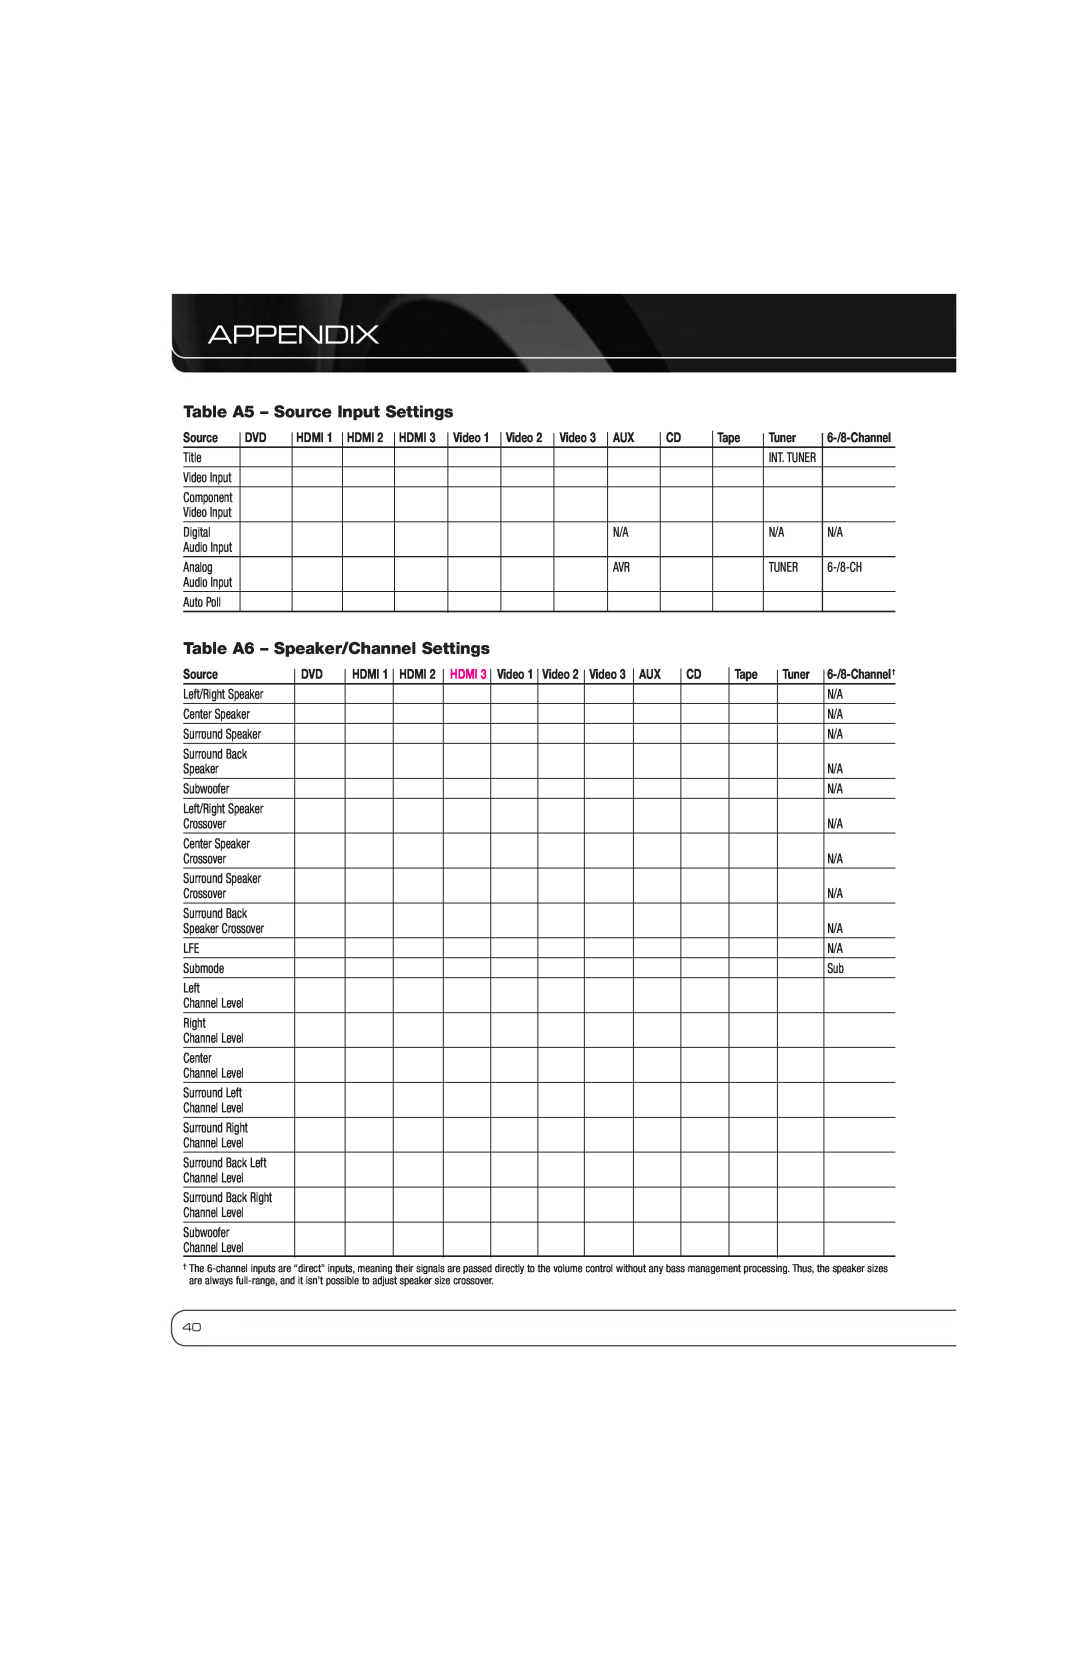 Harman-Kardon AVR 1600 Table A5 - Source Input Settings, Table A6 - Speaker/Channel Settings, Appendix, Hdmi, Tape, Tuner 